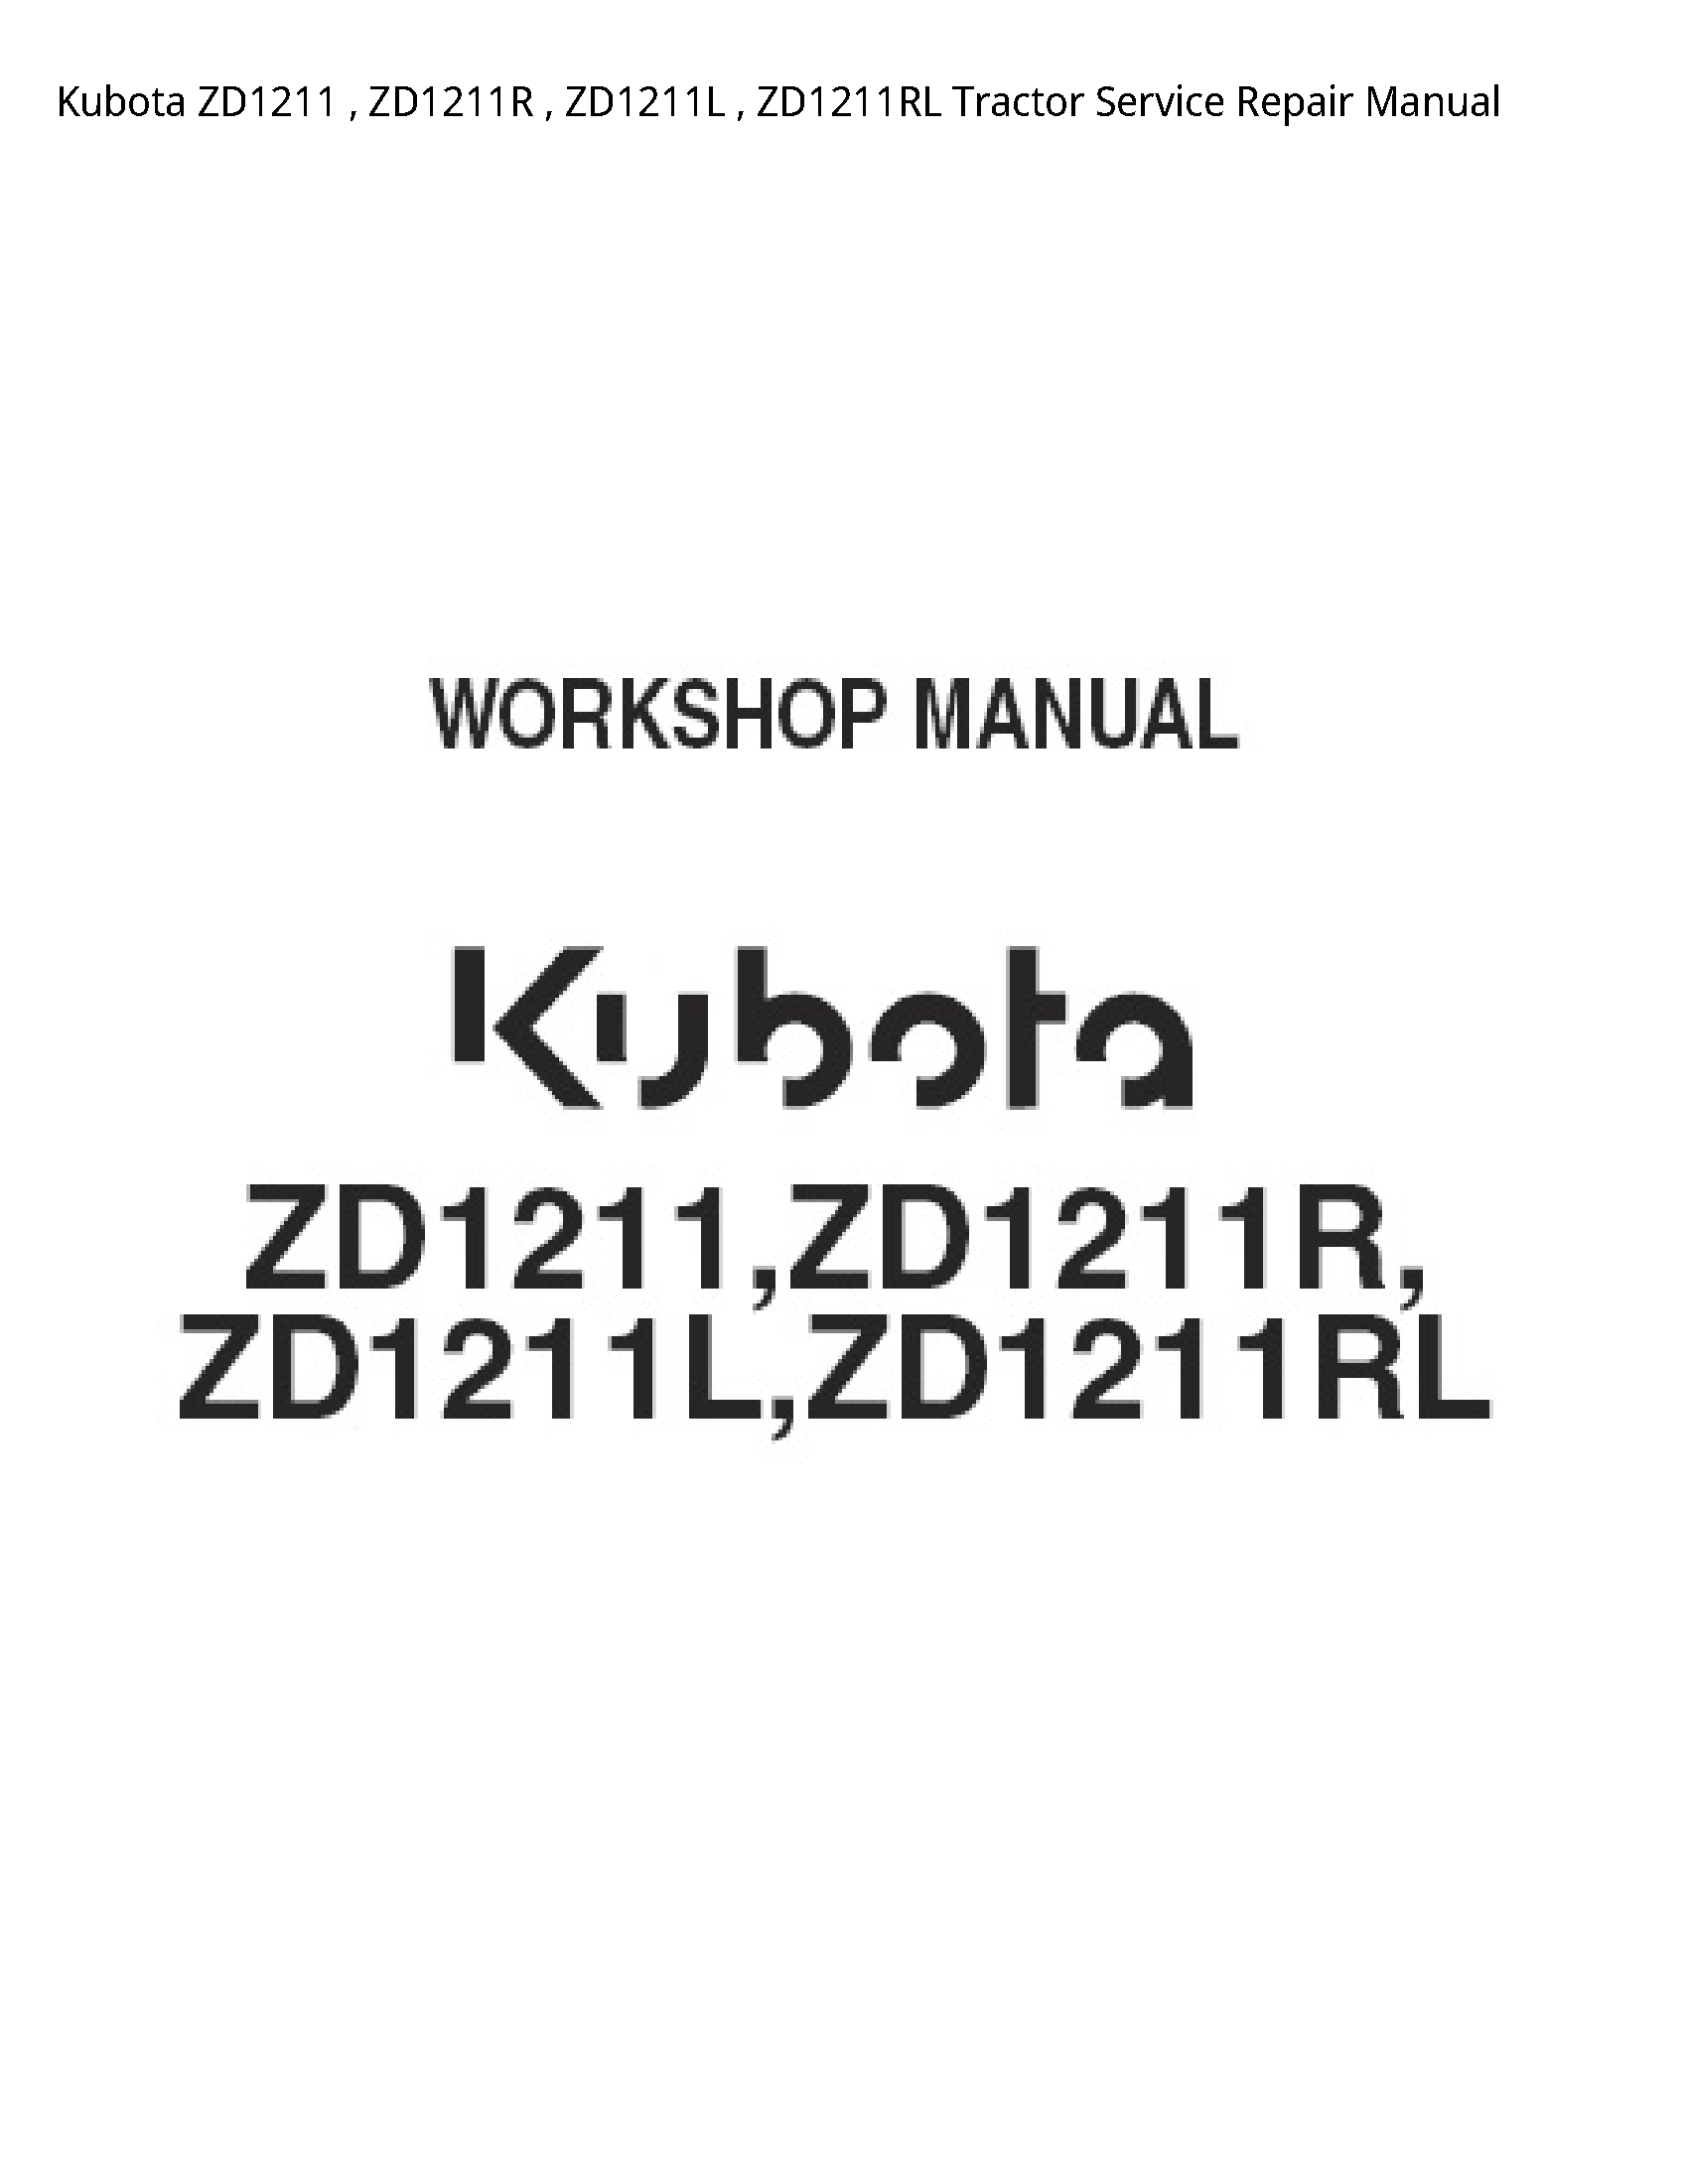 Kubota ZD1211 Tractor manual